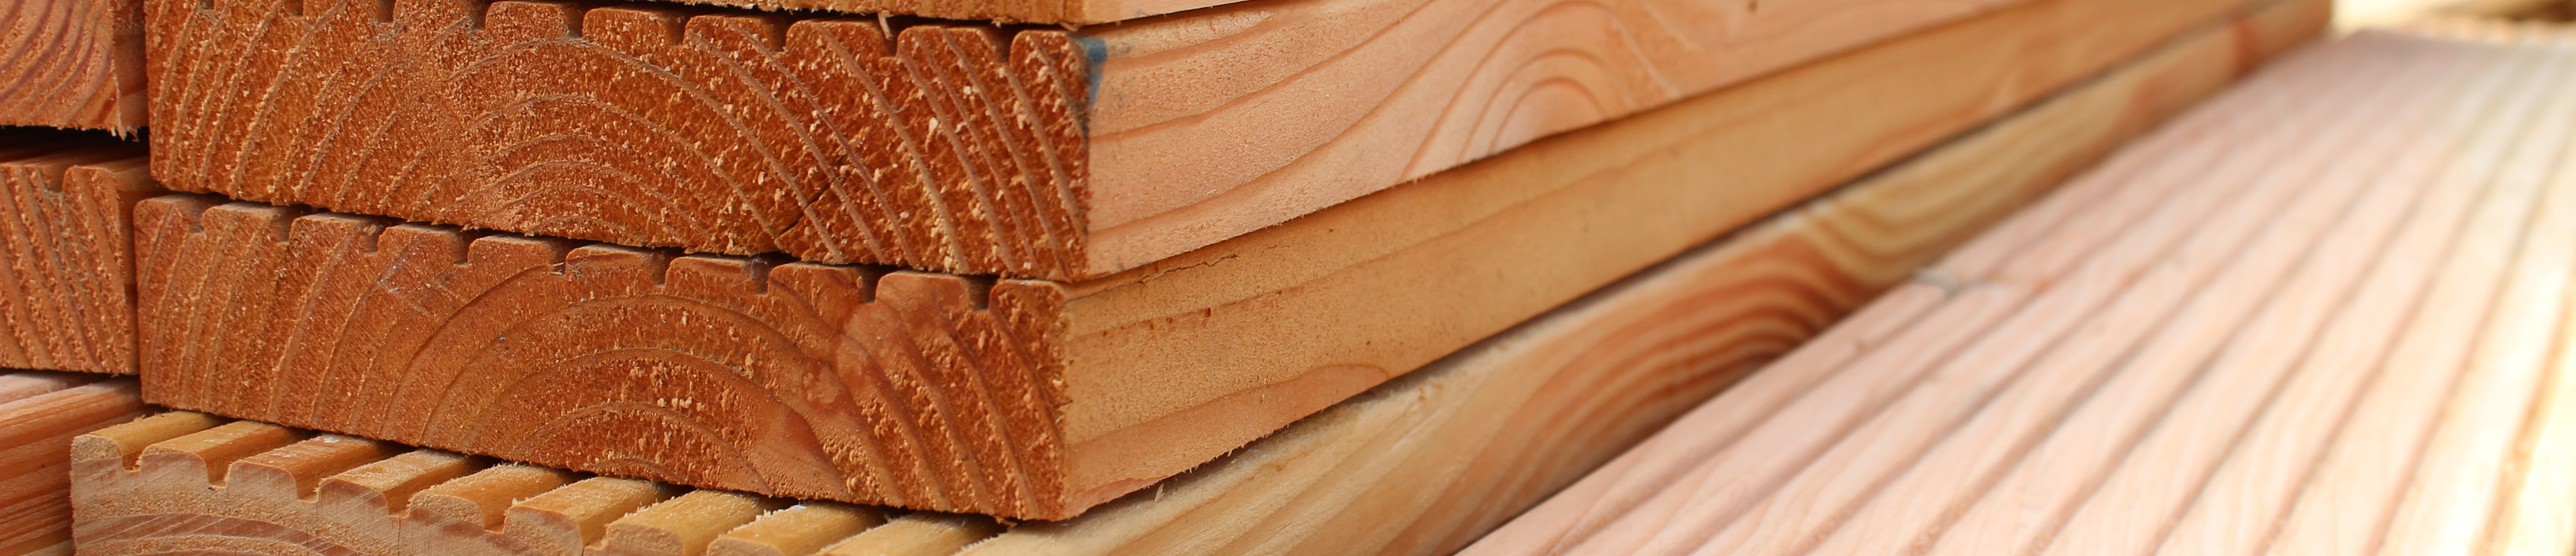 Decking Boards | High Quality Decking Boards For Sale Online | Hardwood Timber Decking